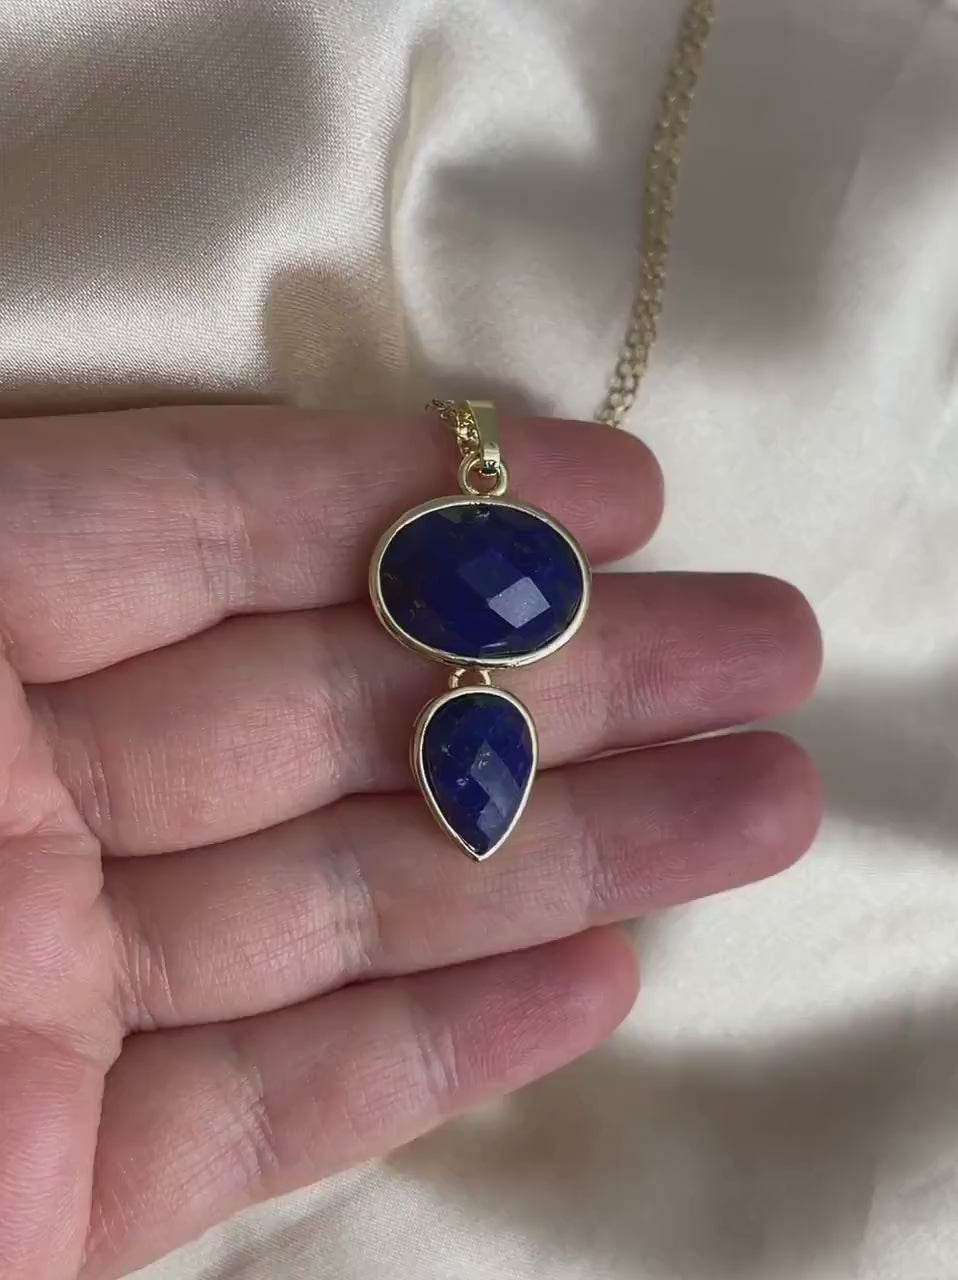 Unique Lapis Lazuli Pendant Necklace Gold, Gift For Mom, M7-51